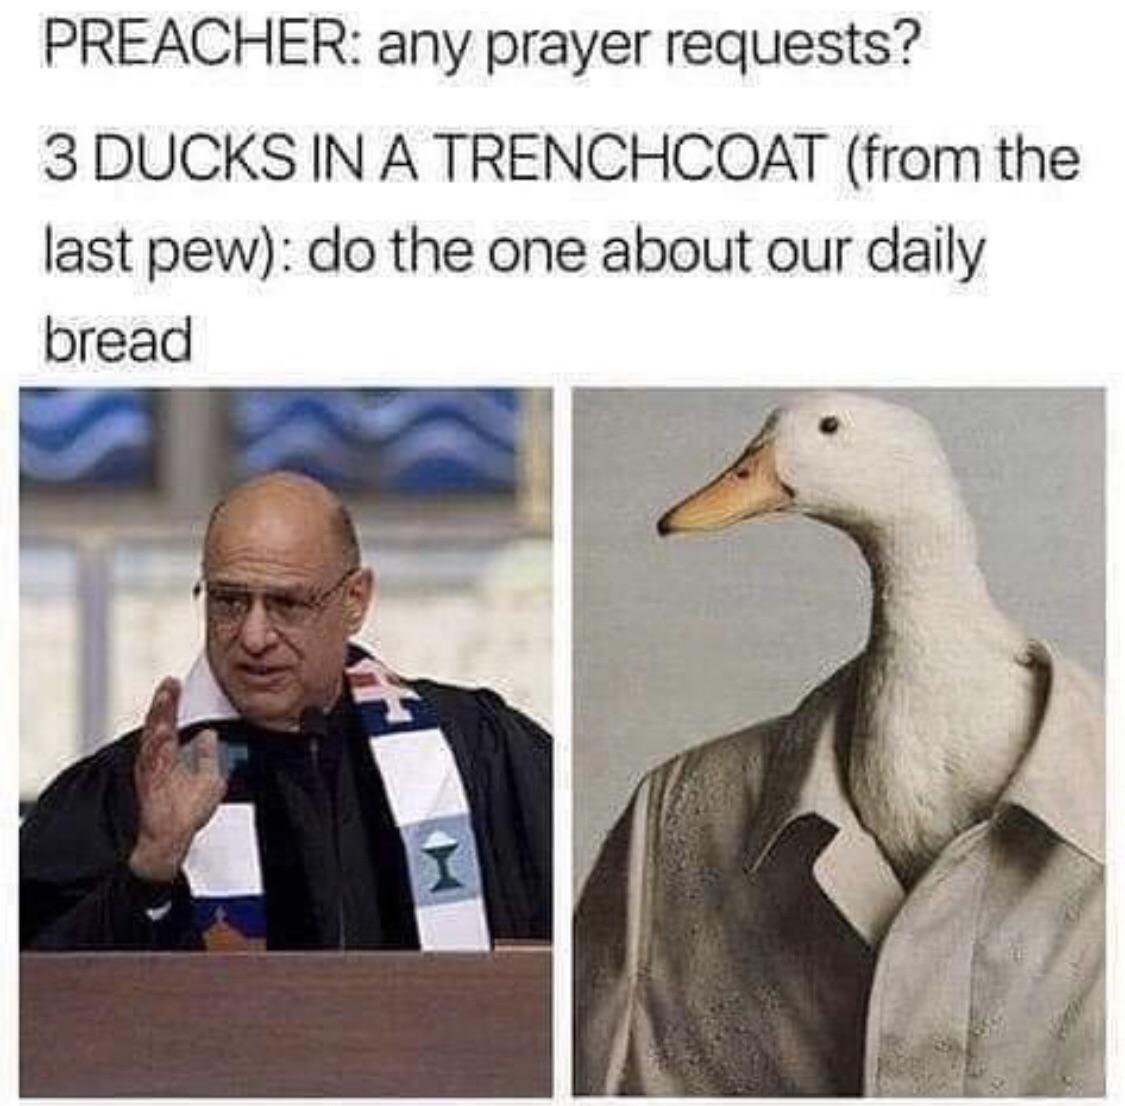 The ducks are sacrilegious, lately.